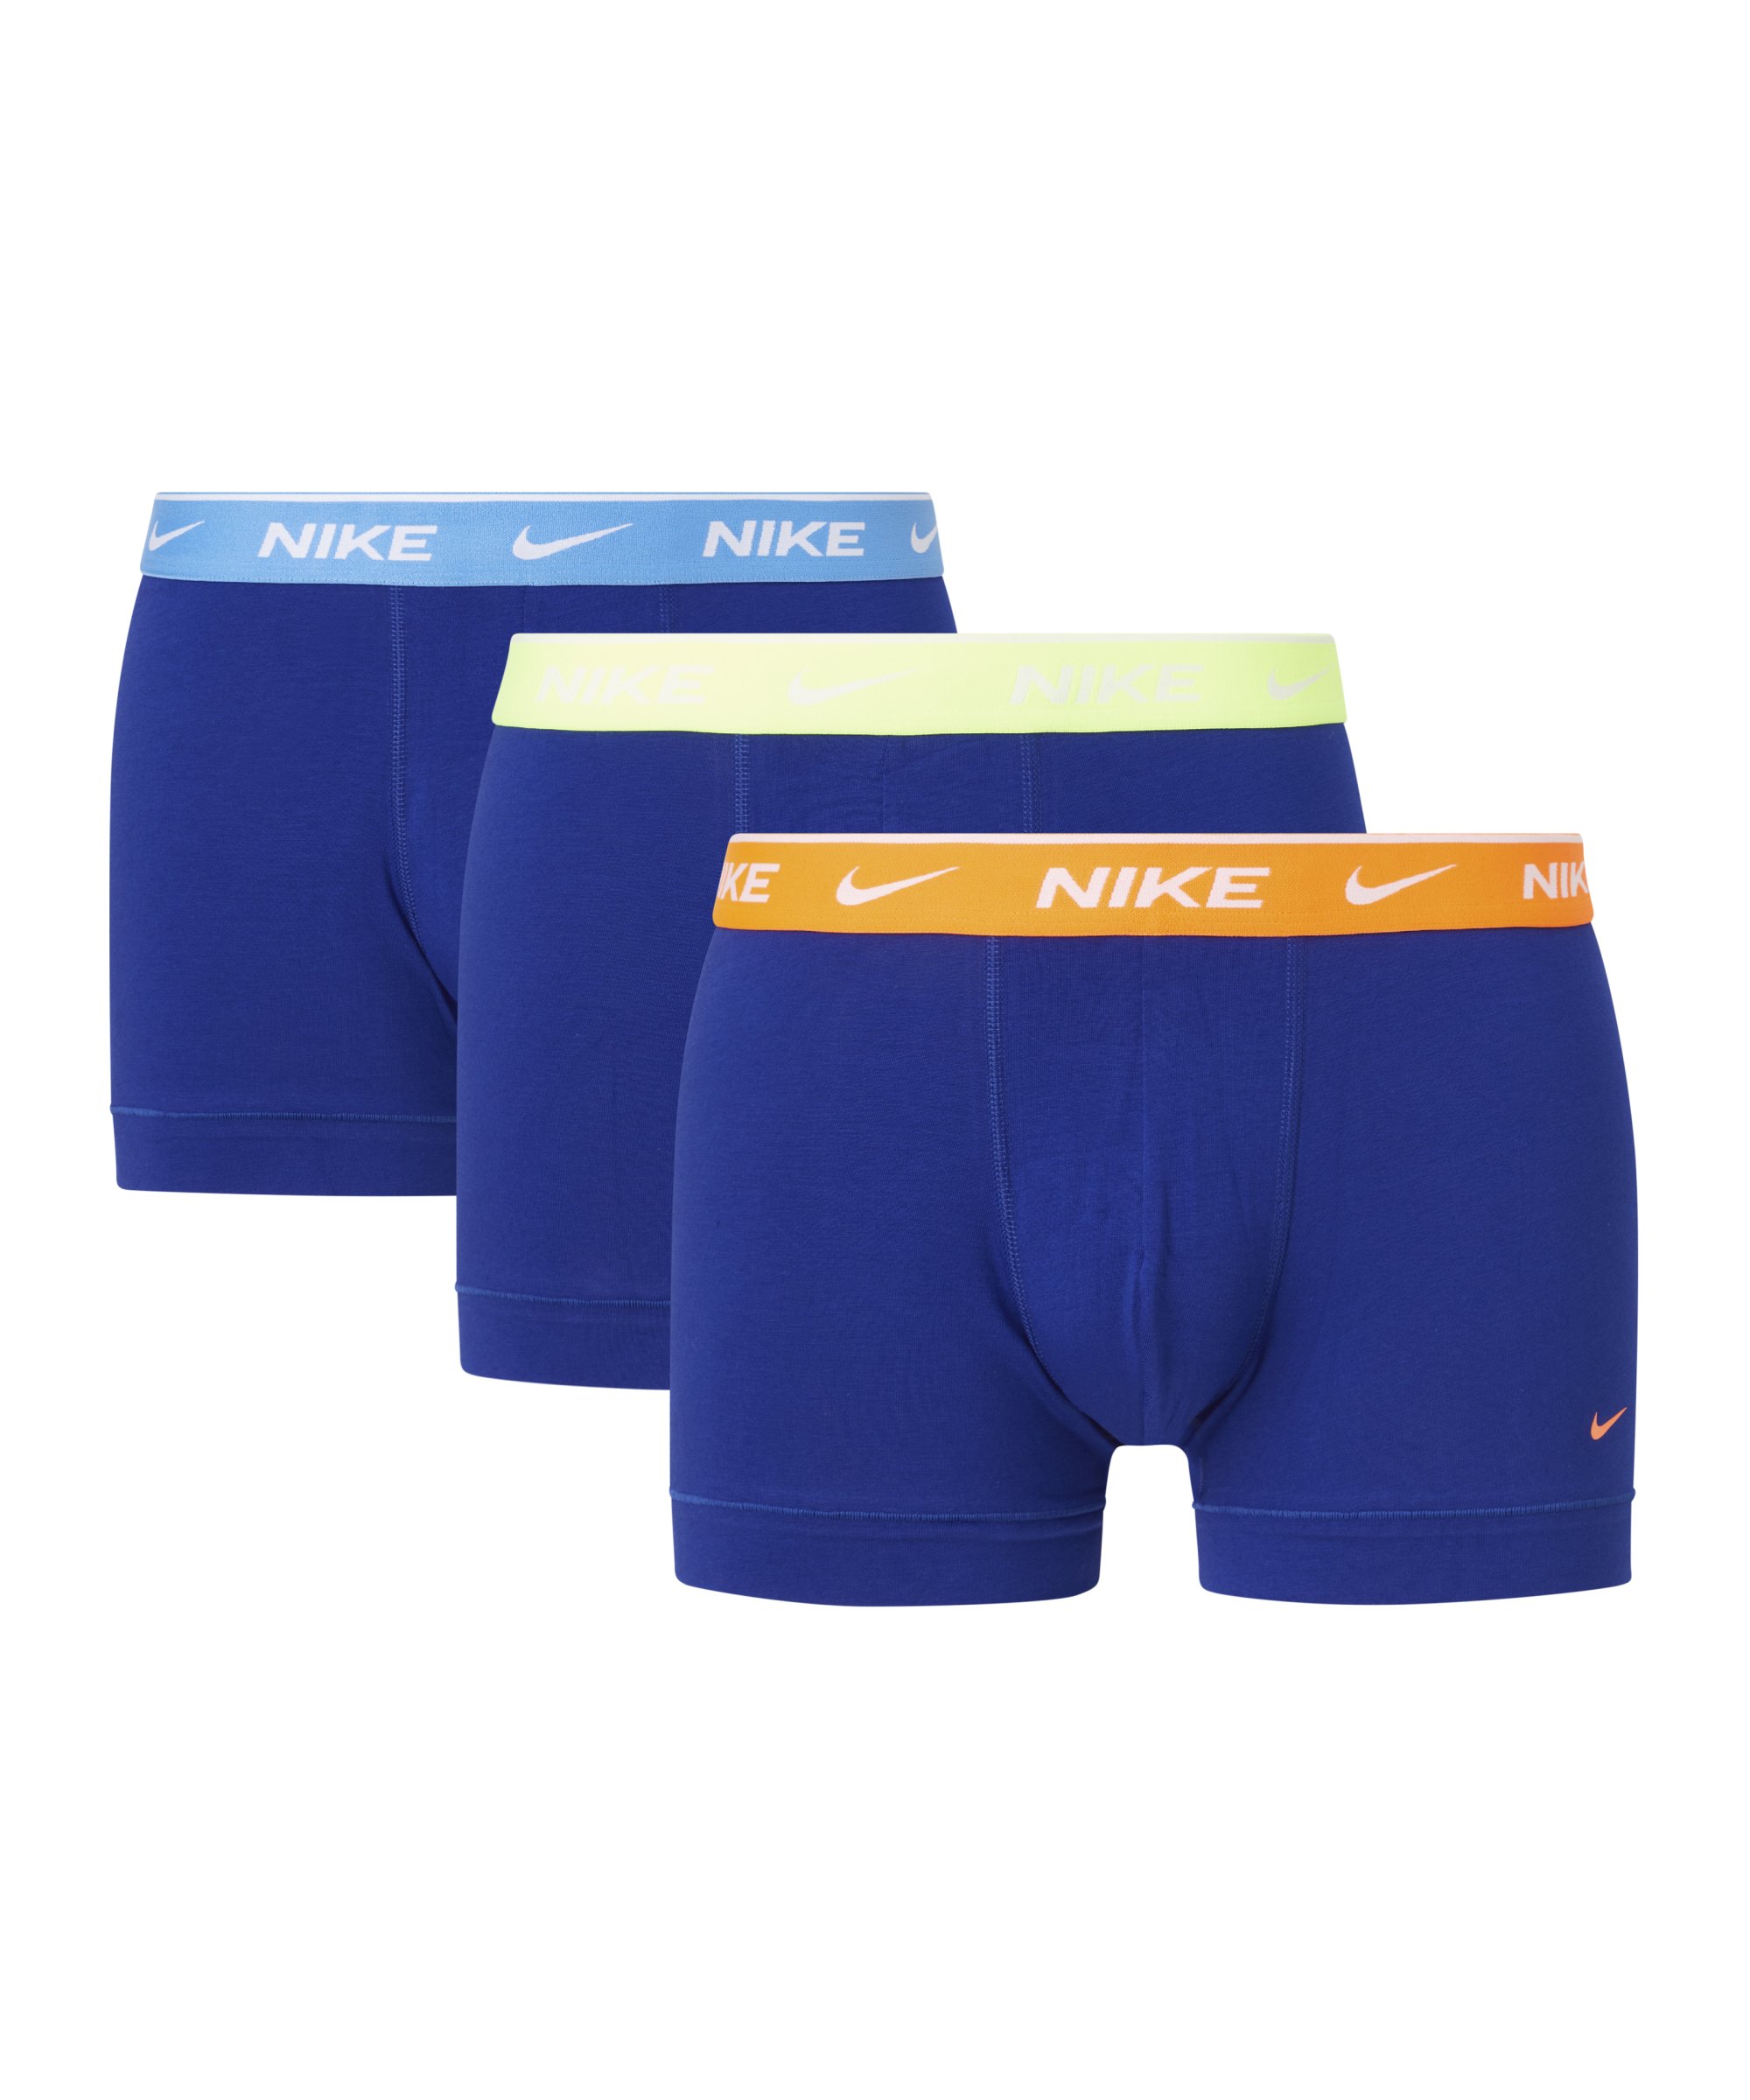 Nike Cotton Trunk Boxershort 3er Pack Blau FJV3 - blau